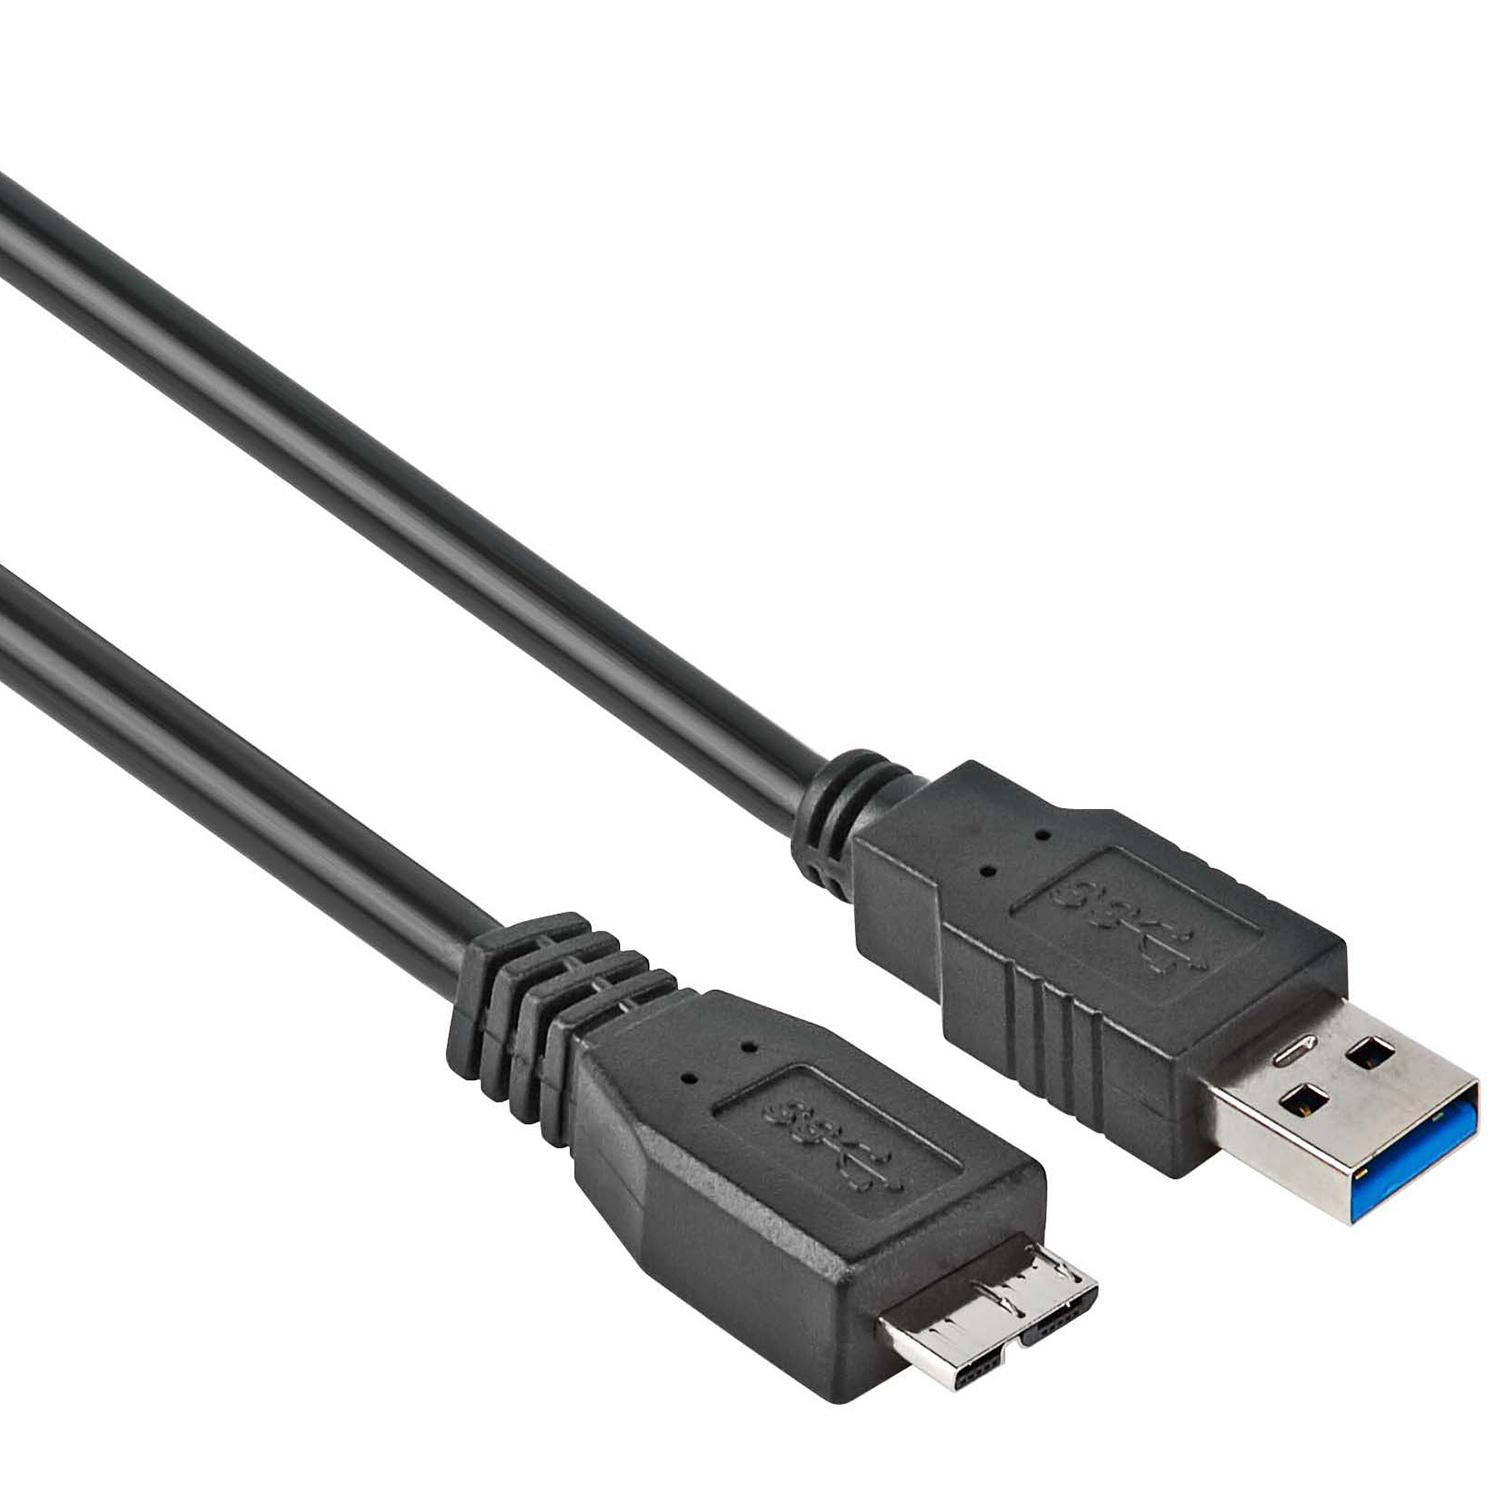 USB 3.0 micro kabel - Allteq